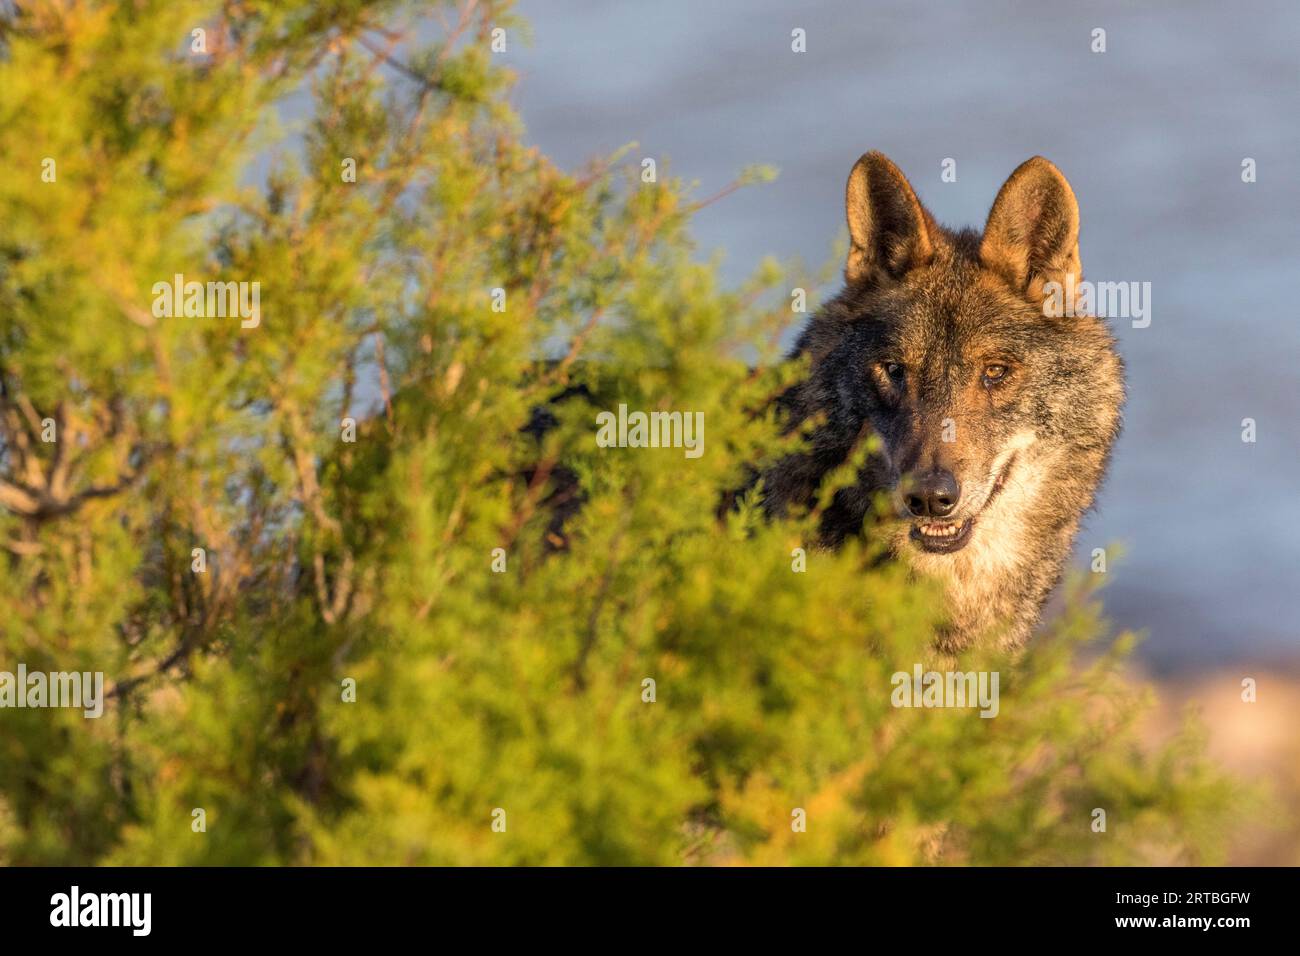 Lupo iberico, lupo iberico (Canis lupus signatus), in piedi dietro un cespuglio, Spagna Foto Stock